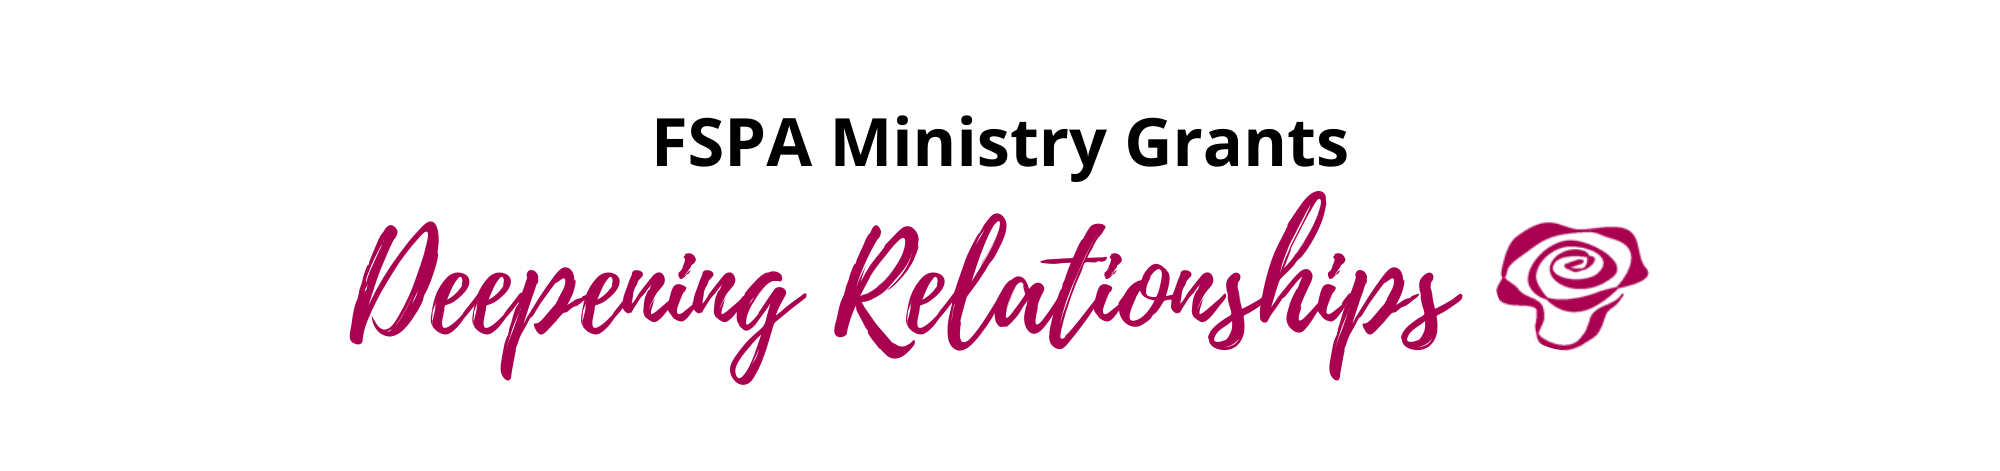 FSPA Ministry Grants Deepening Relationships rose logo